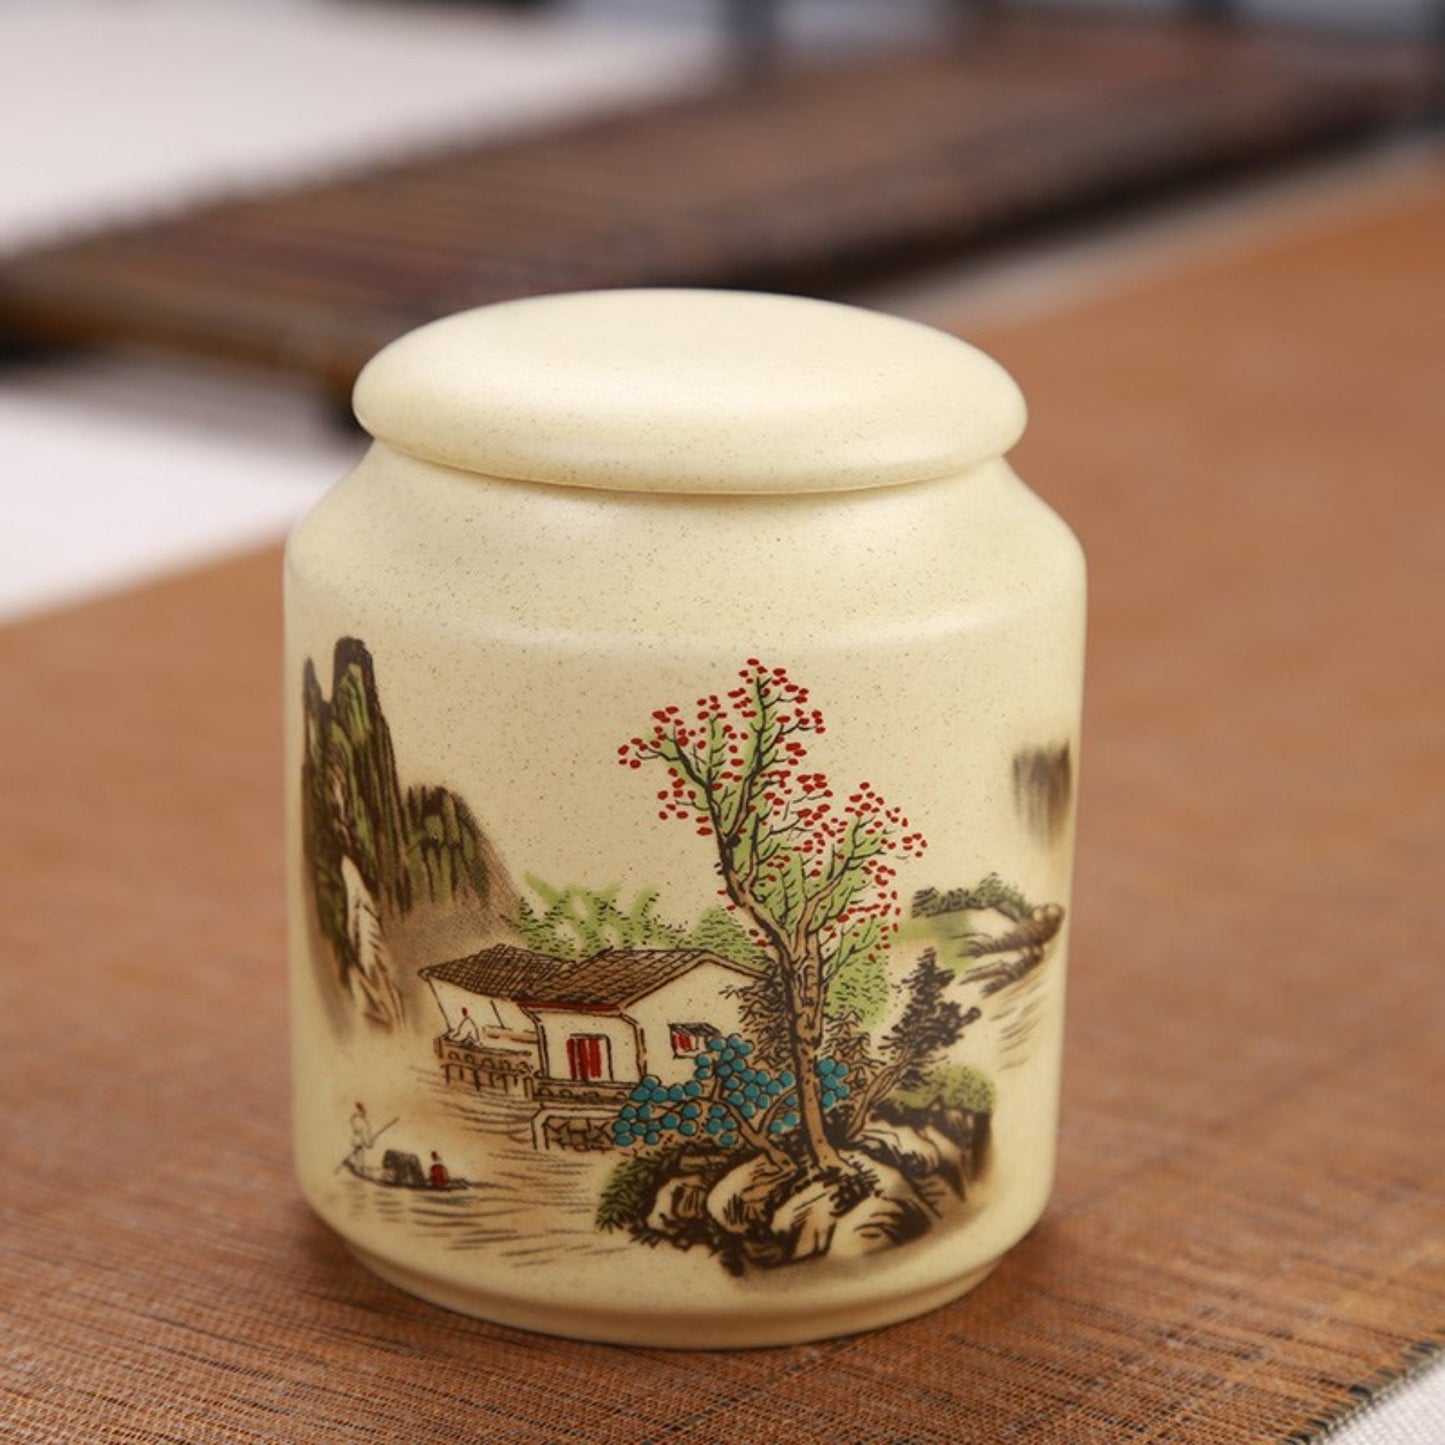 Japanese Art Ceramic Tea Container | Storage Jar, Tea, Coffee, Sugar, Spices, Herbs - -